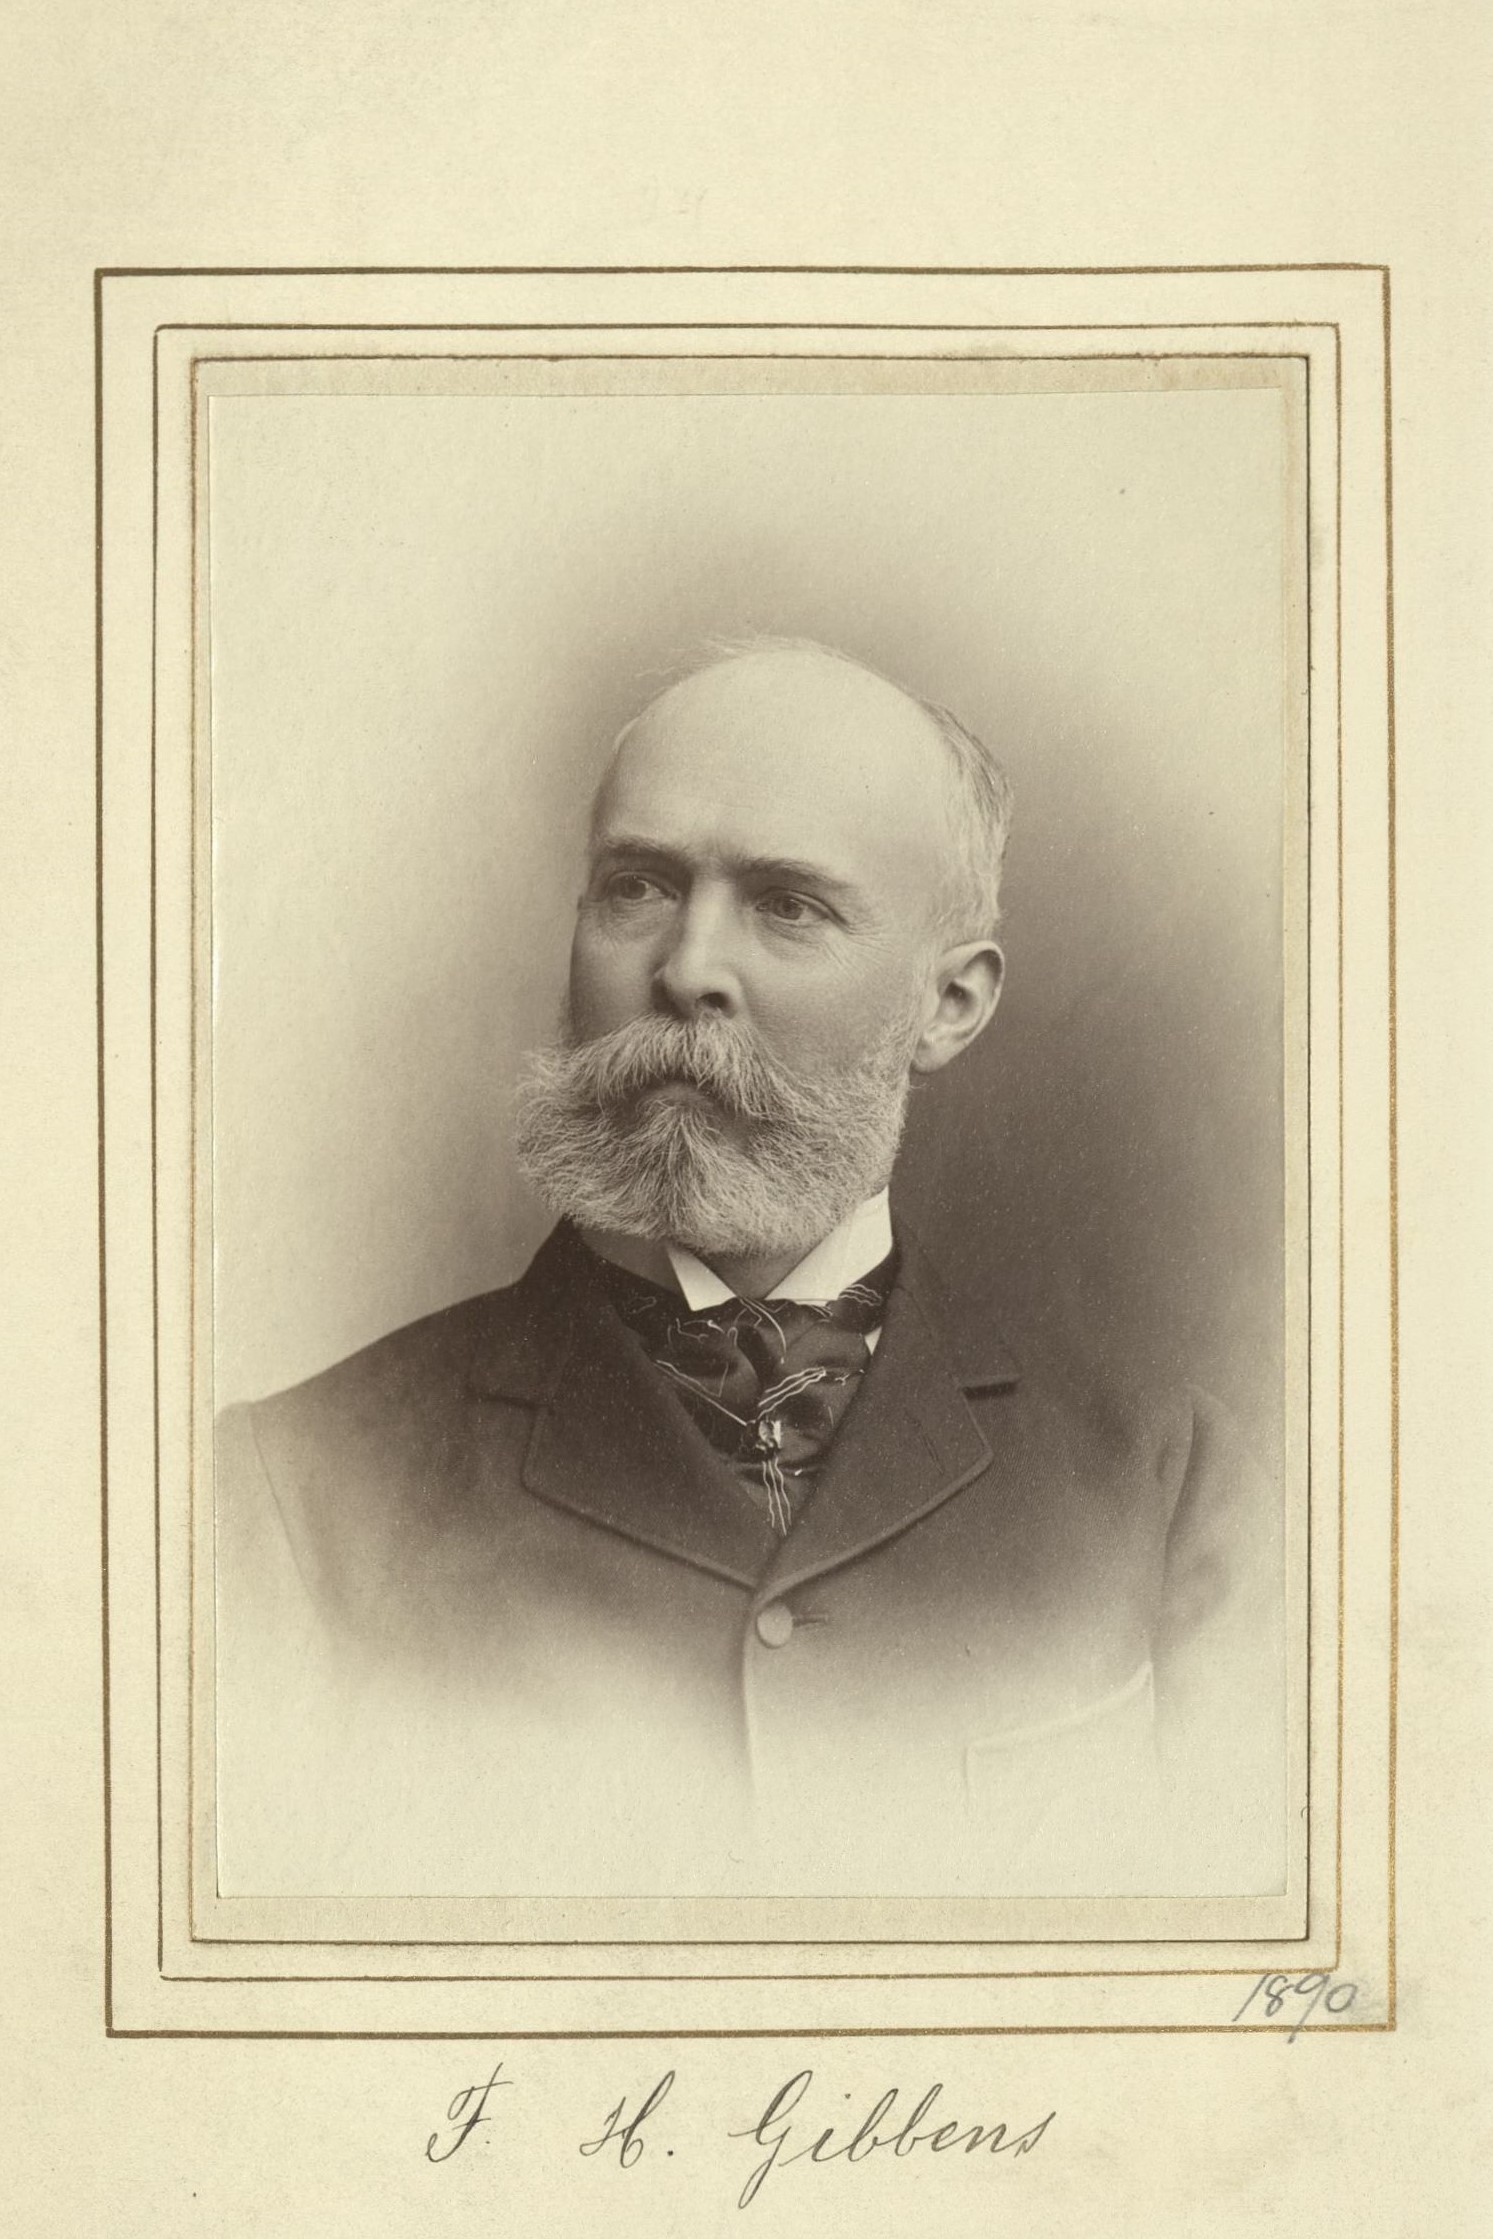 Member portrait of Frederick H. Gibbens